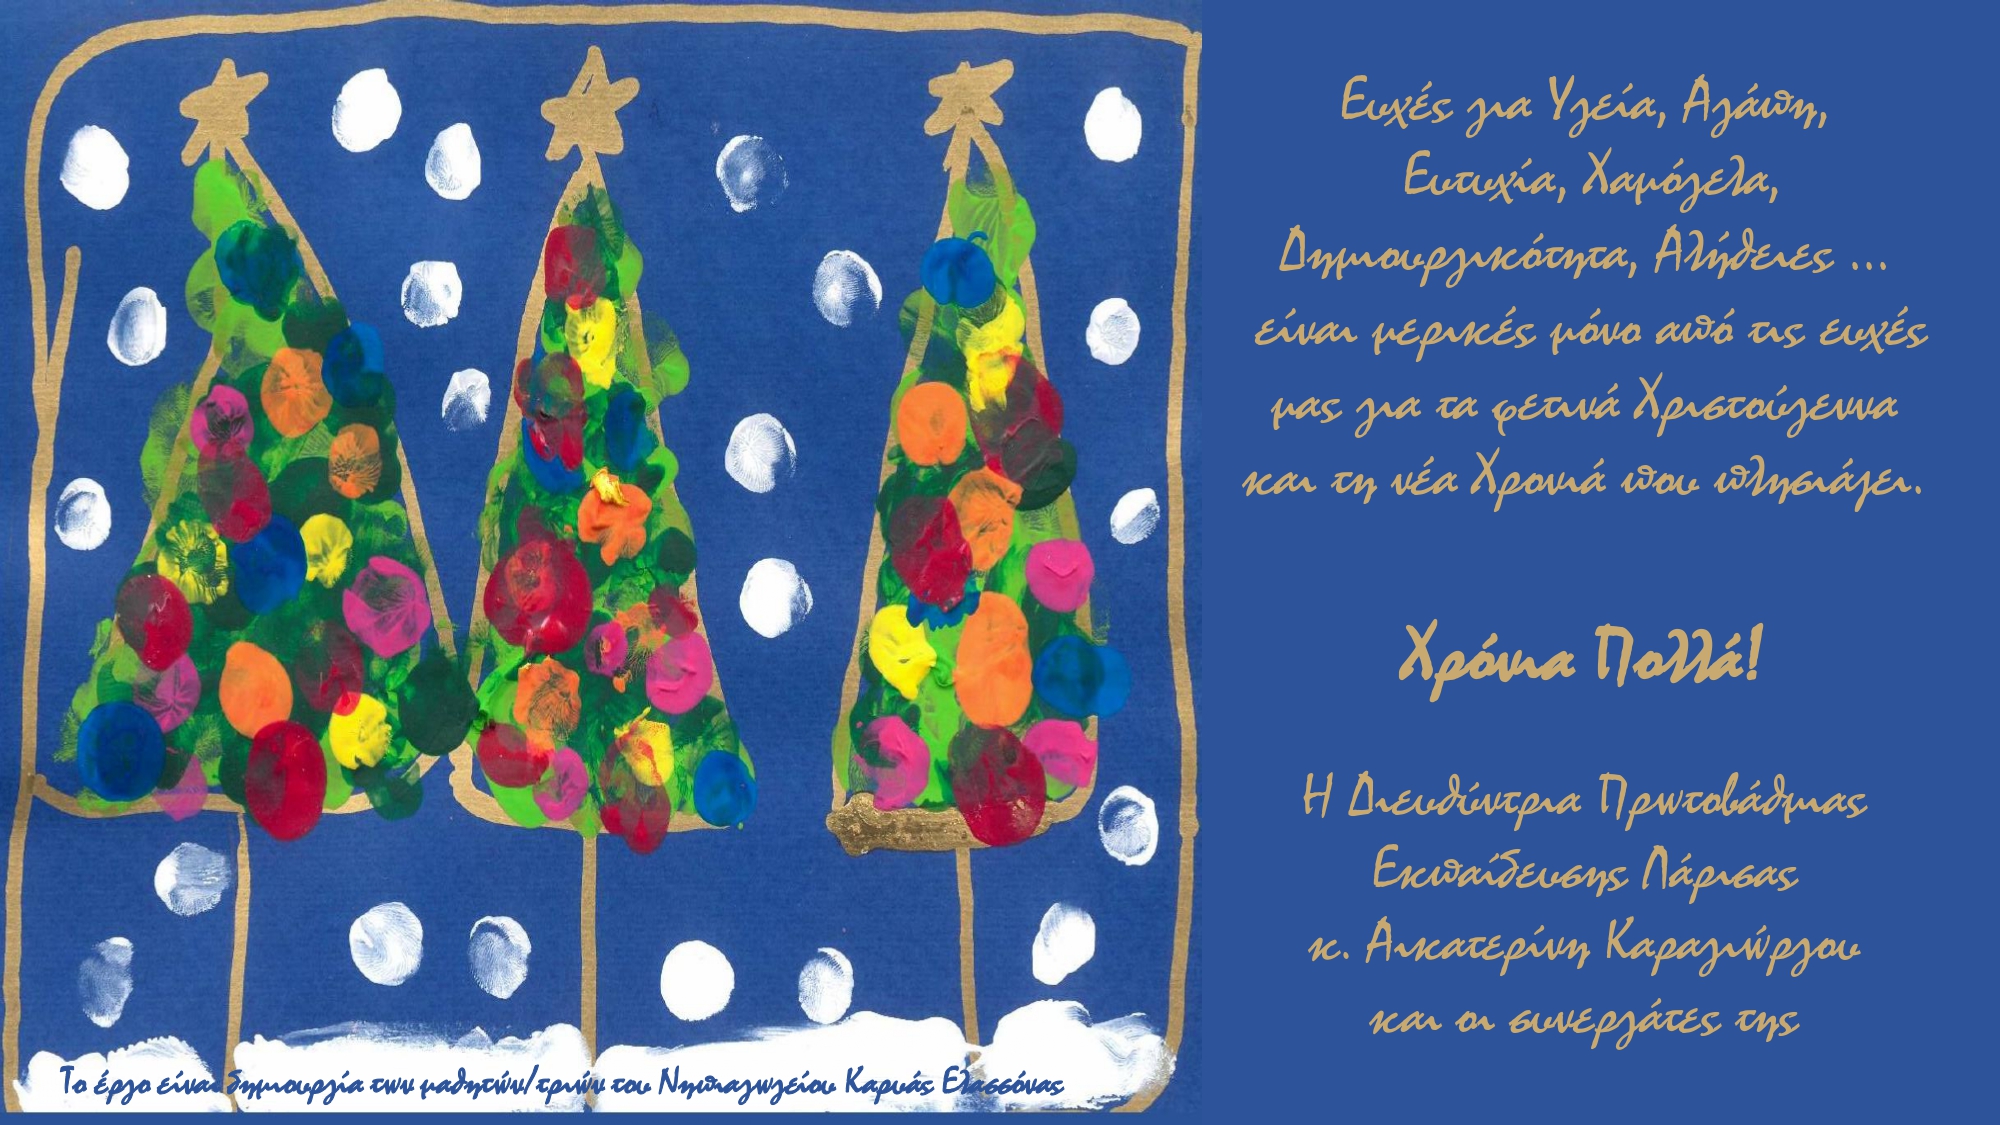 To Xριστουγεννιάτικο μήνυμα της διευθύντριας Πρωτοβάθμιας Εκπαίδευσης Λάρισας